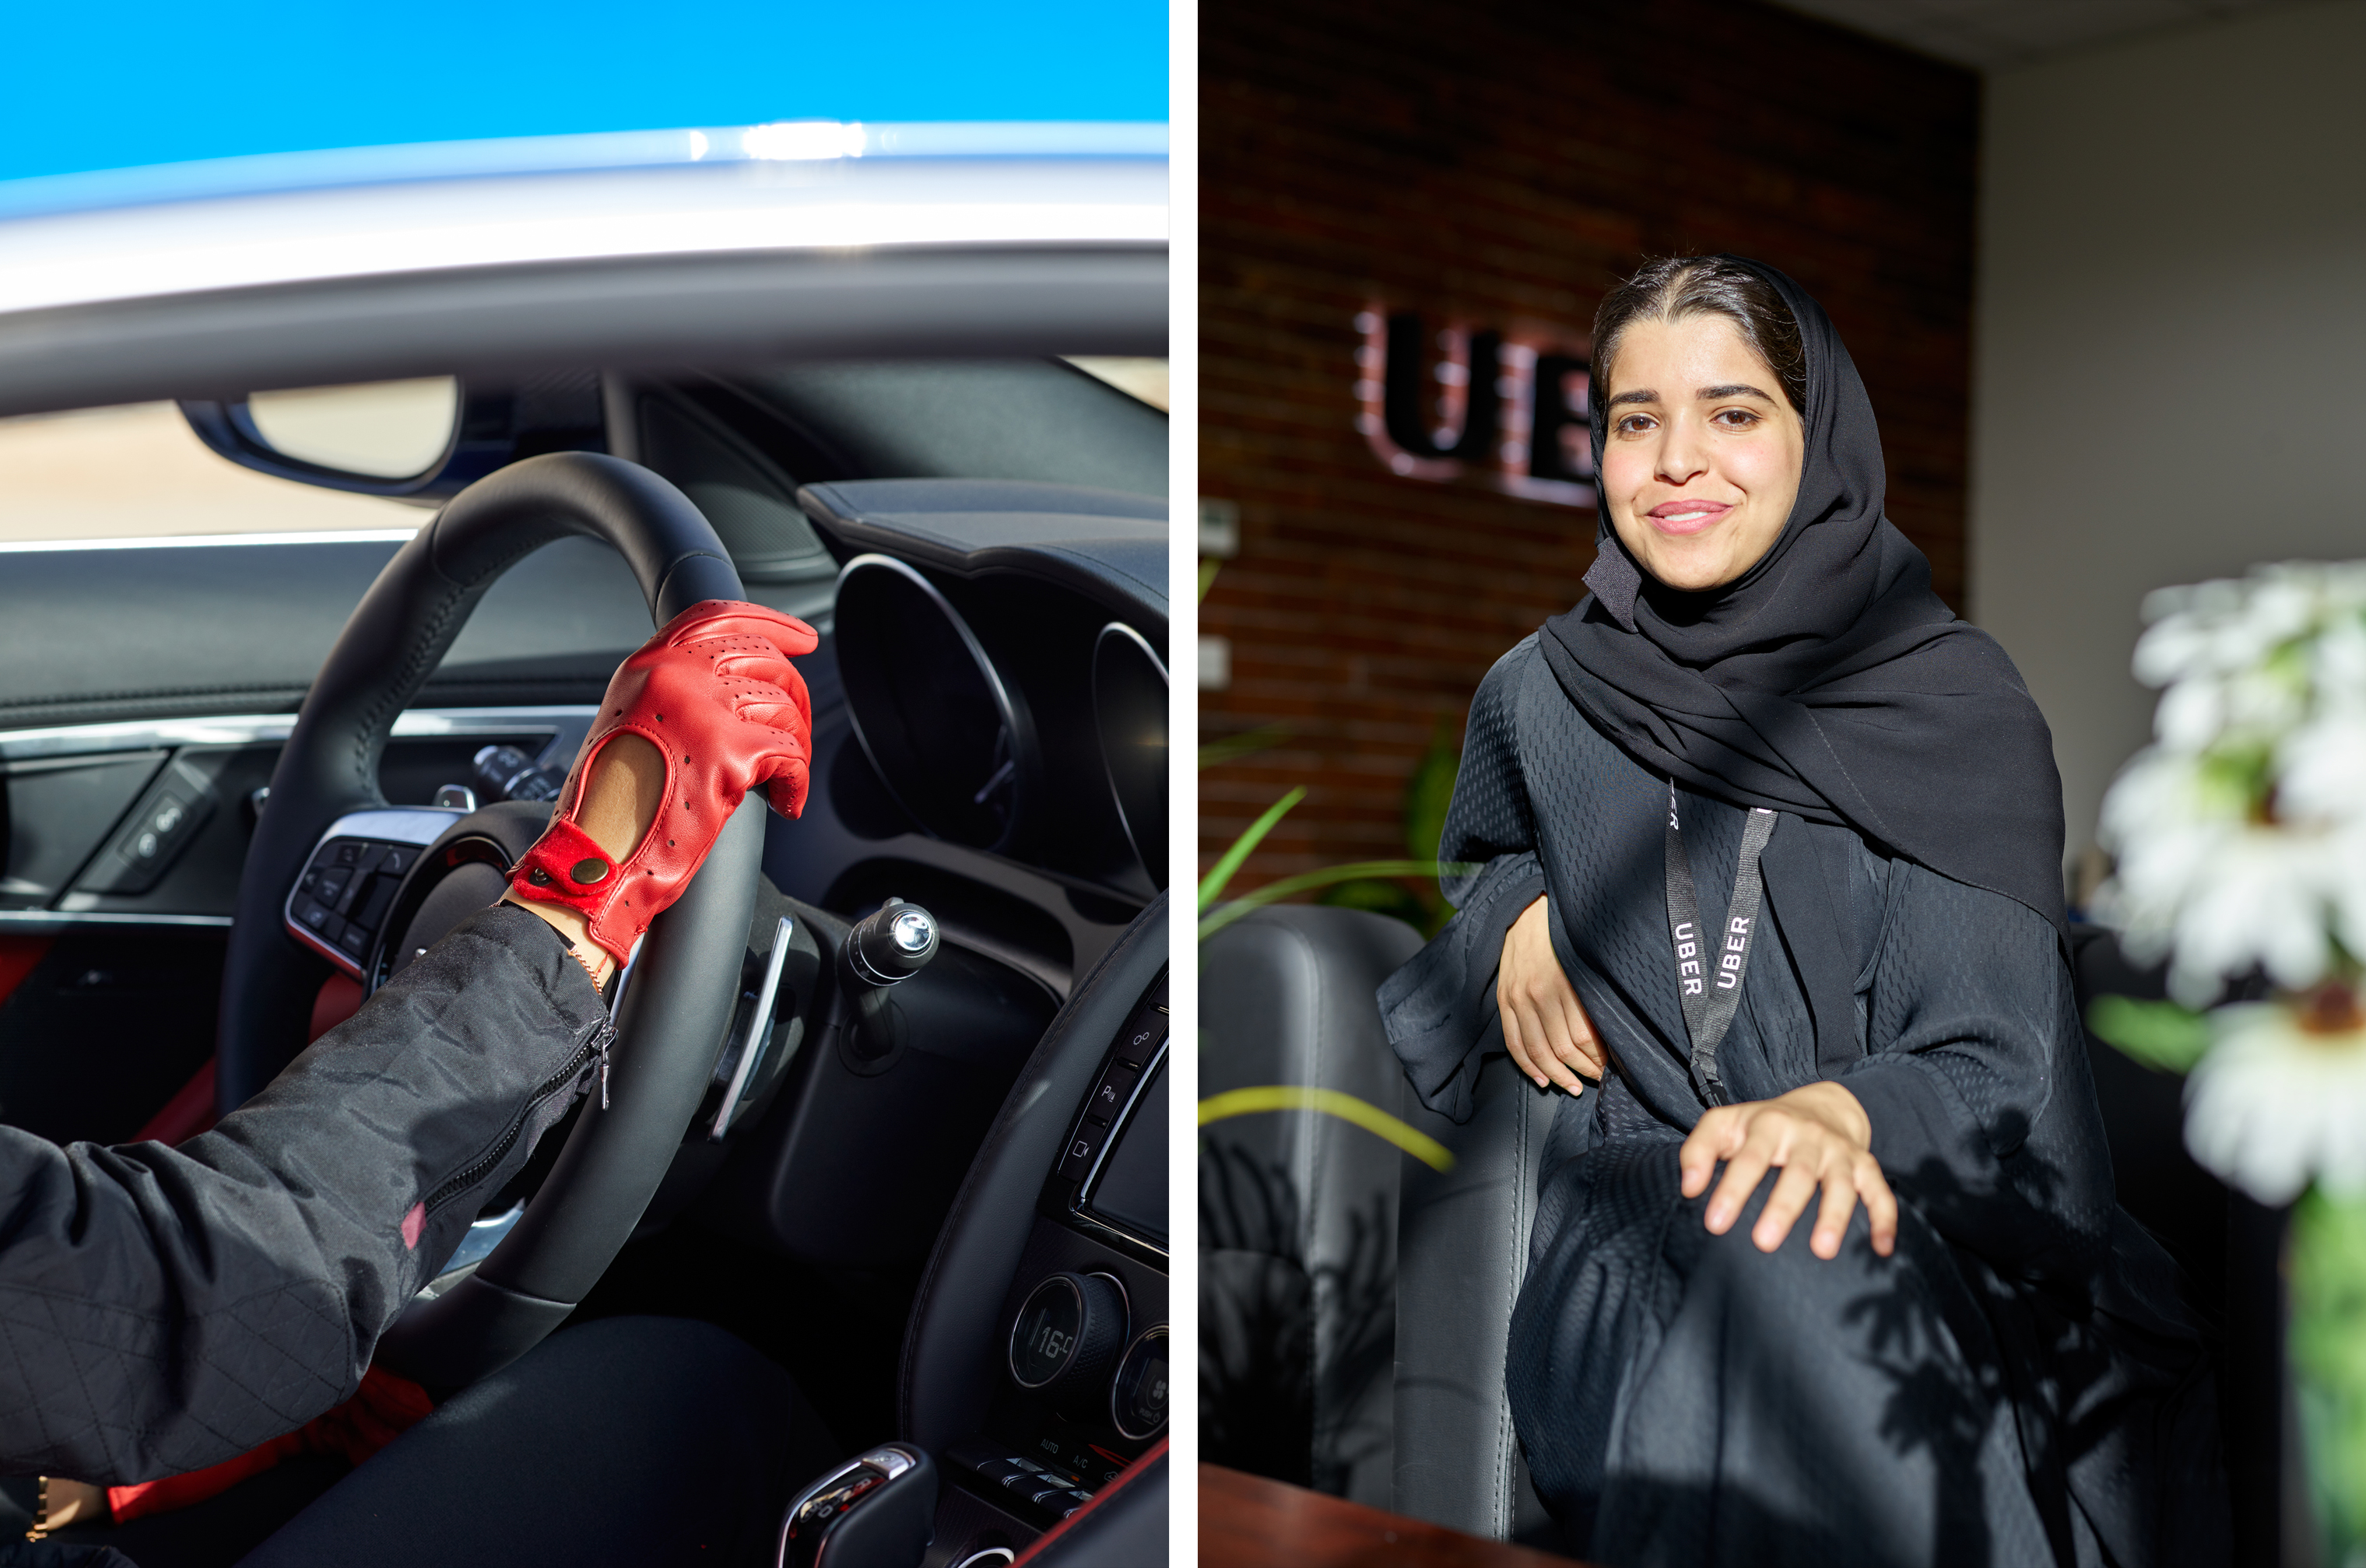 Behind the wheel with race-car driver Aseel al-Hamad; Ohoud al-Arifi, marketing manager for Uber Saudi Arabia. (Ayesha Malik for TIME)